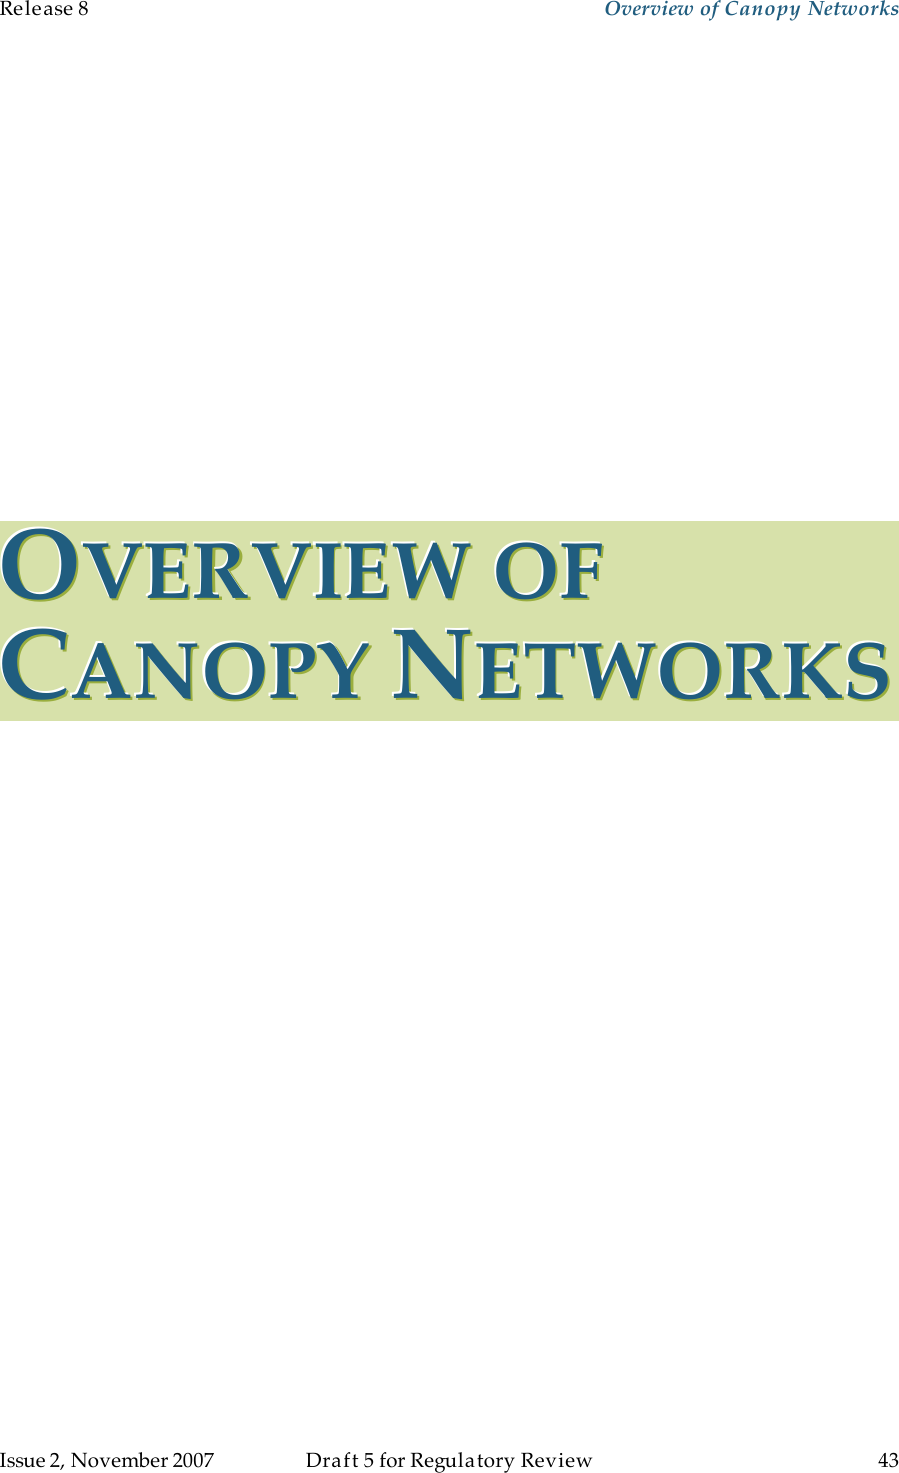 Release 8    Overview of Canopy Networks                  March 200                  Through Software Release 6.   Issue 2, November 2007  Draft 5 for Regulatory Review  43     OOOVVVEEERRRVVVIIIEEEWWW   OOOFFF   CCCAAANNNOOOPPPYYY   NNNEEETTTWWWOOORRRKKKSSS   